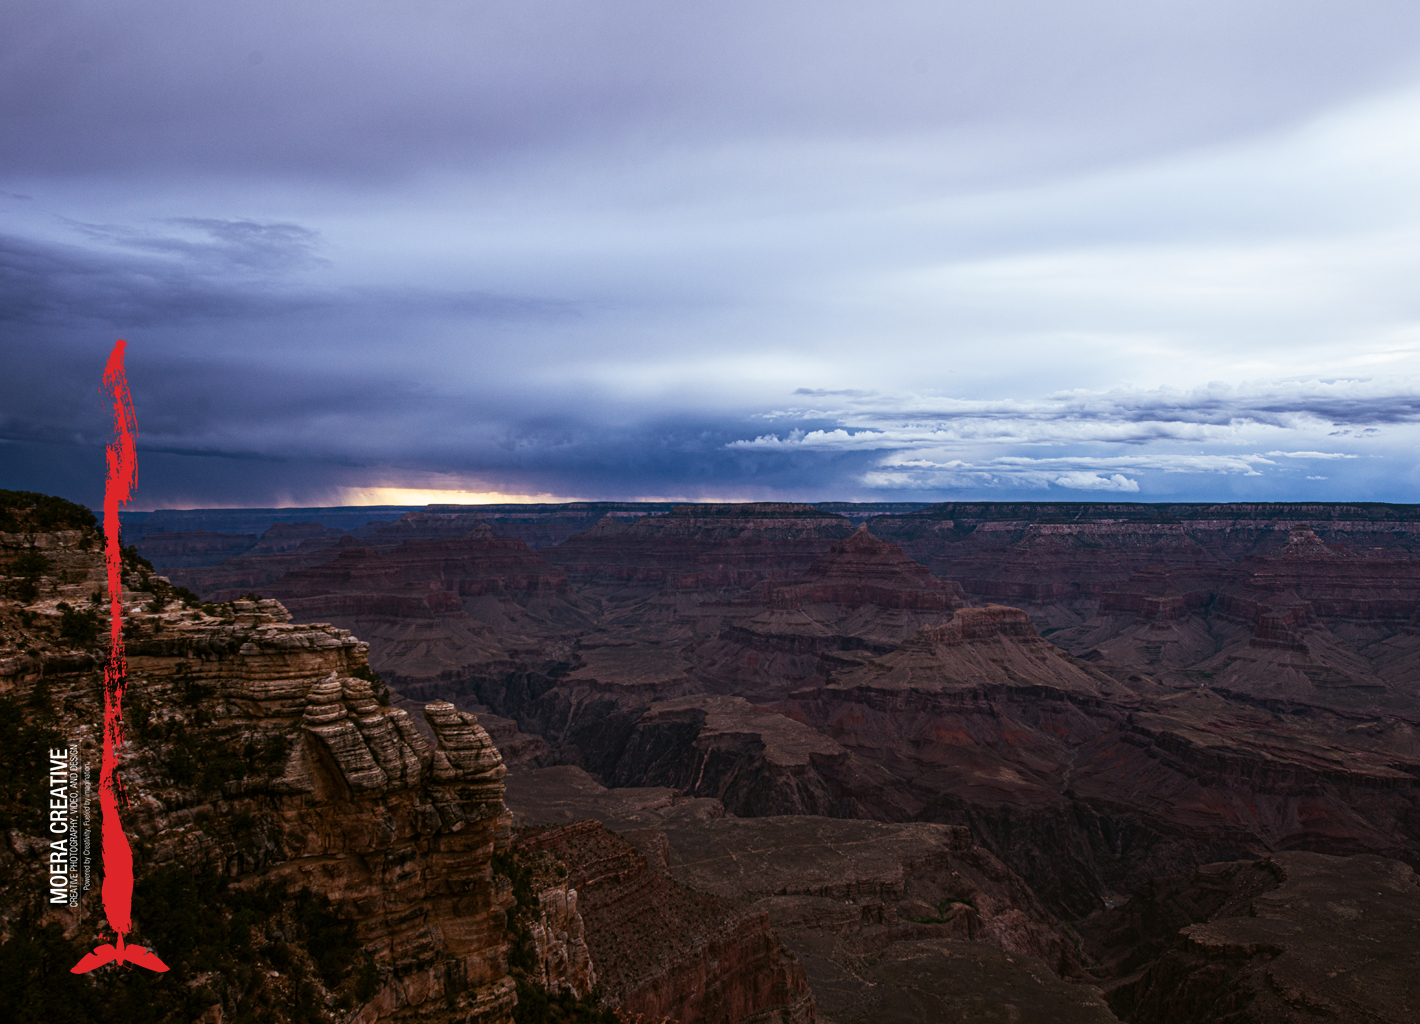 Moera Creative Photography Grand Canyon South Rim